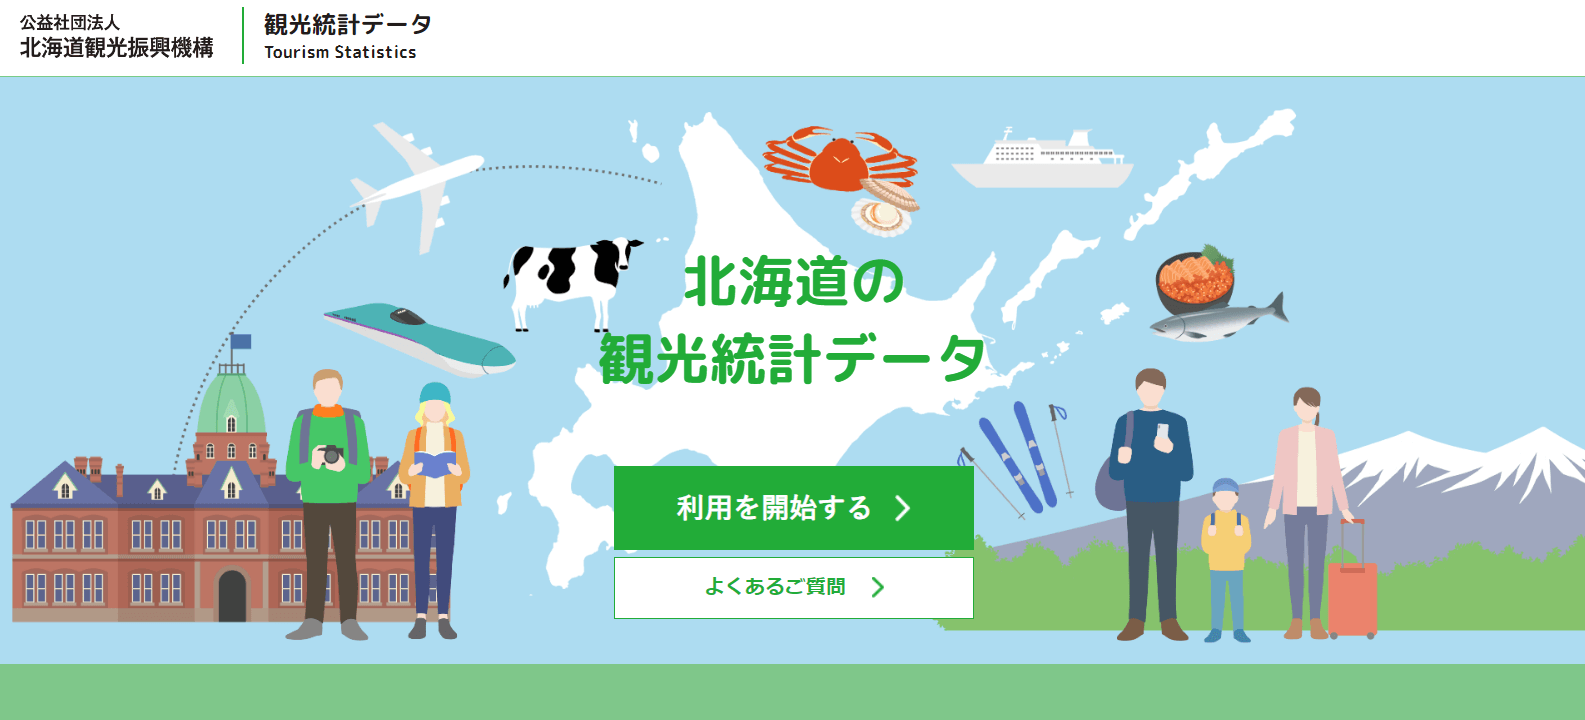 北海道観光振興機構様の観光統計データ